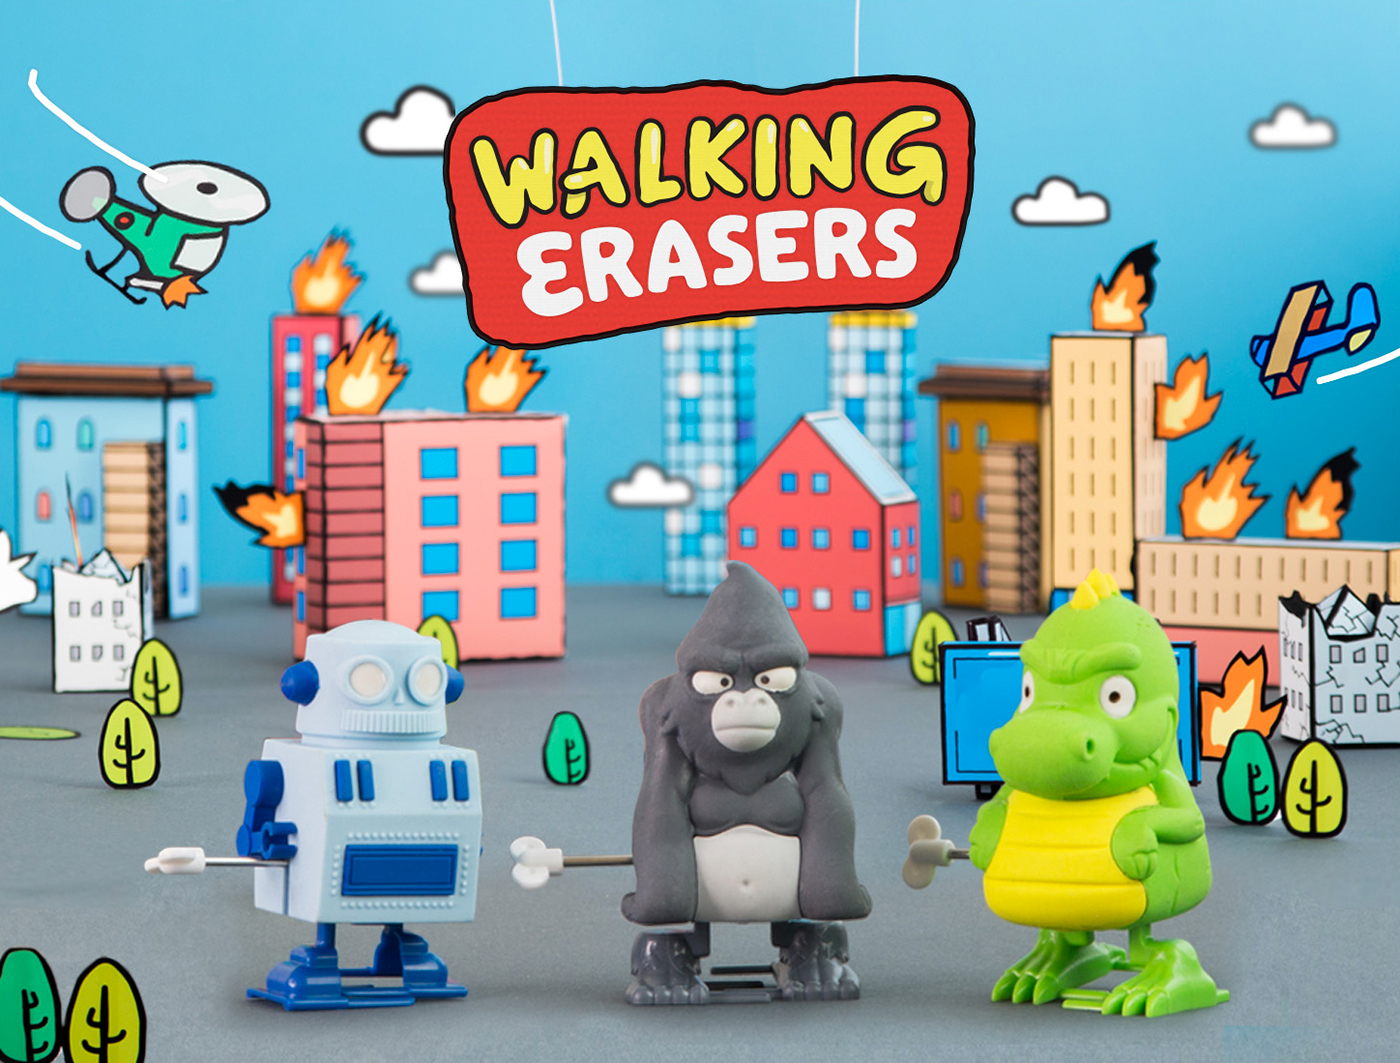 Dinosaur gorilla robot monsters carft Mockup Fun Wind-Up eraser rubber toy